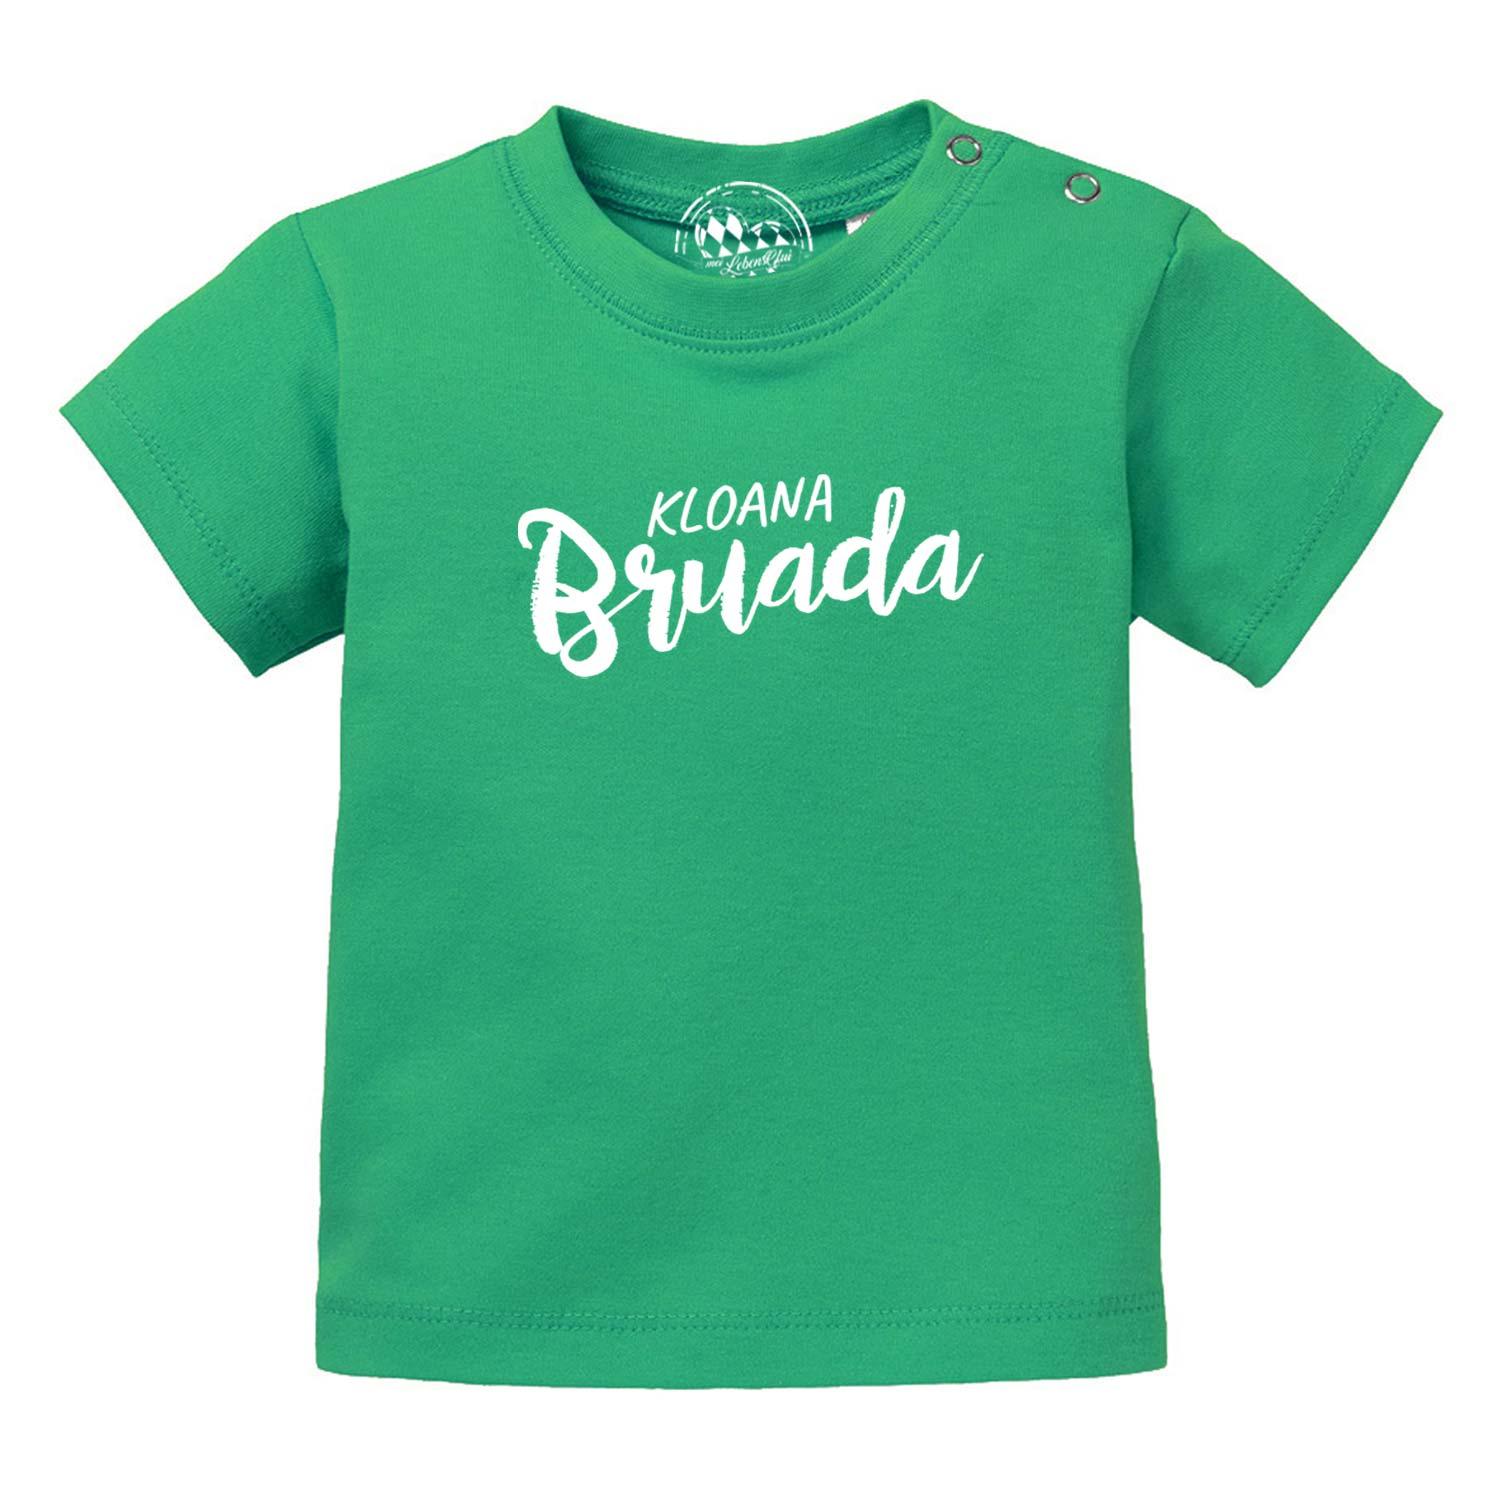 Baby T-Shirt "Kloana Bruada" - bavariashop - mei LebensGfui